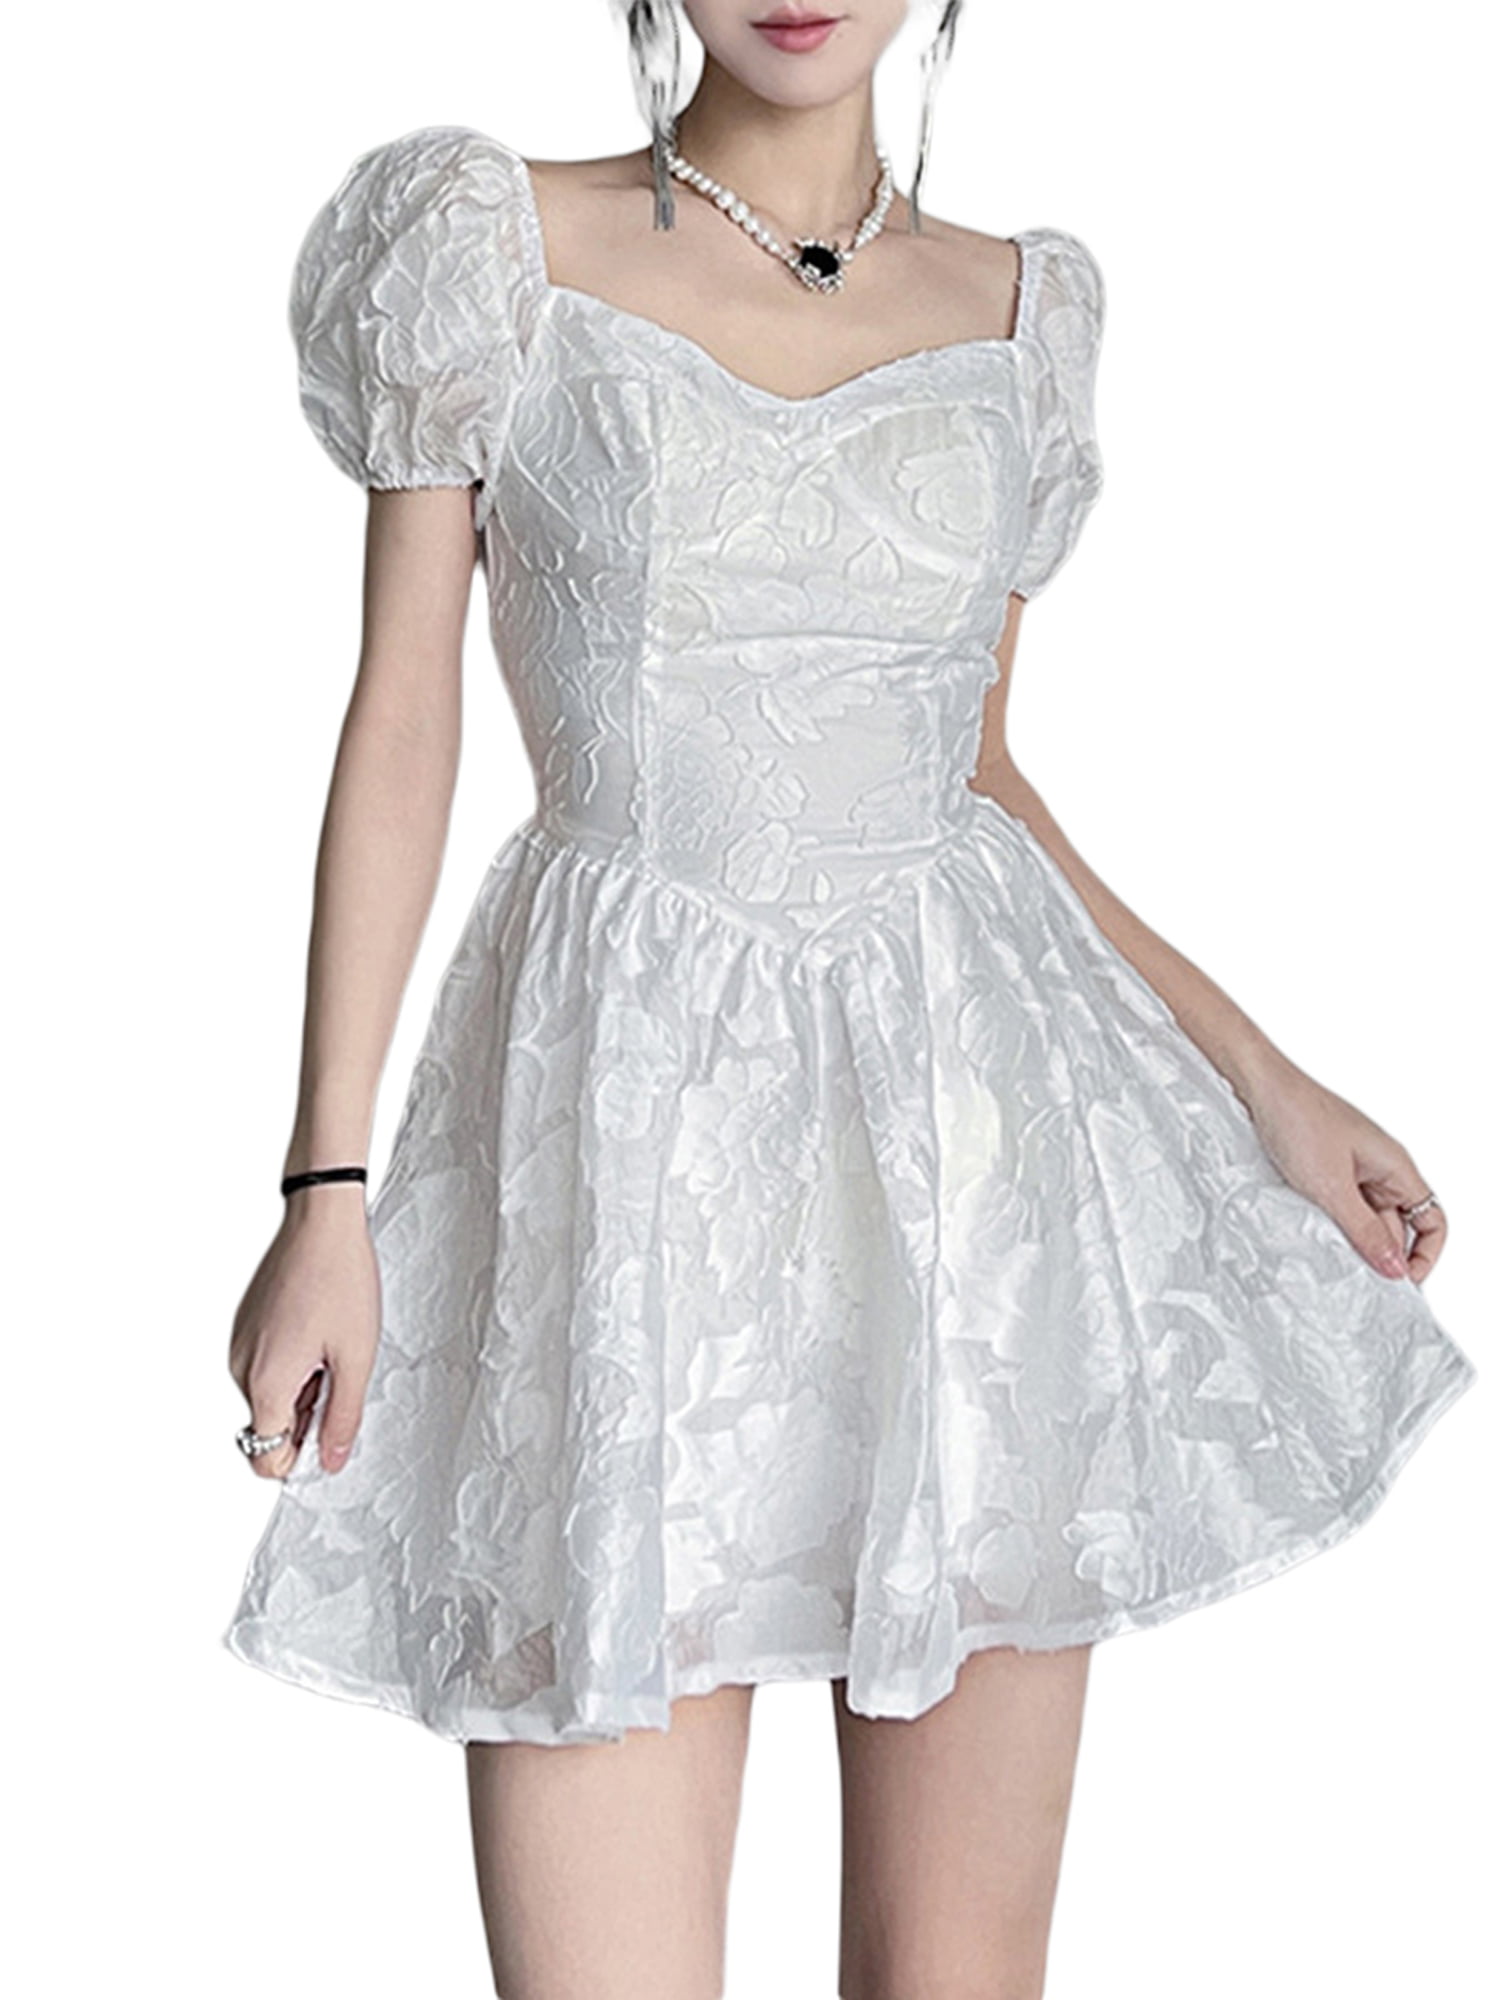 fairycore dress